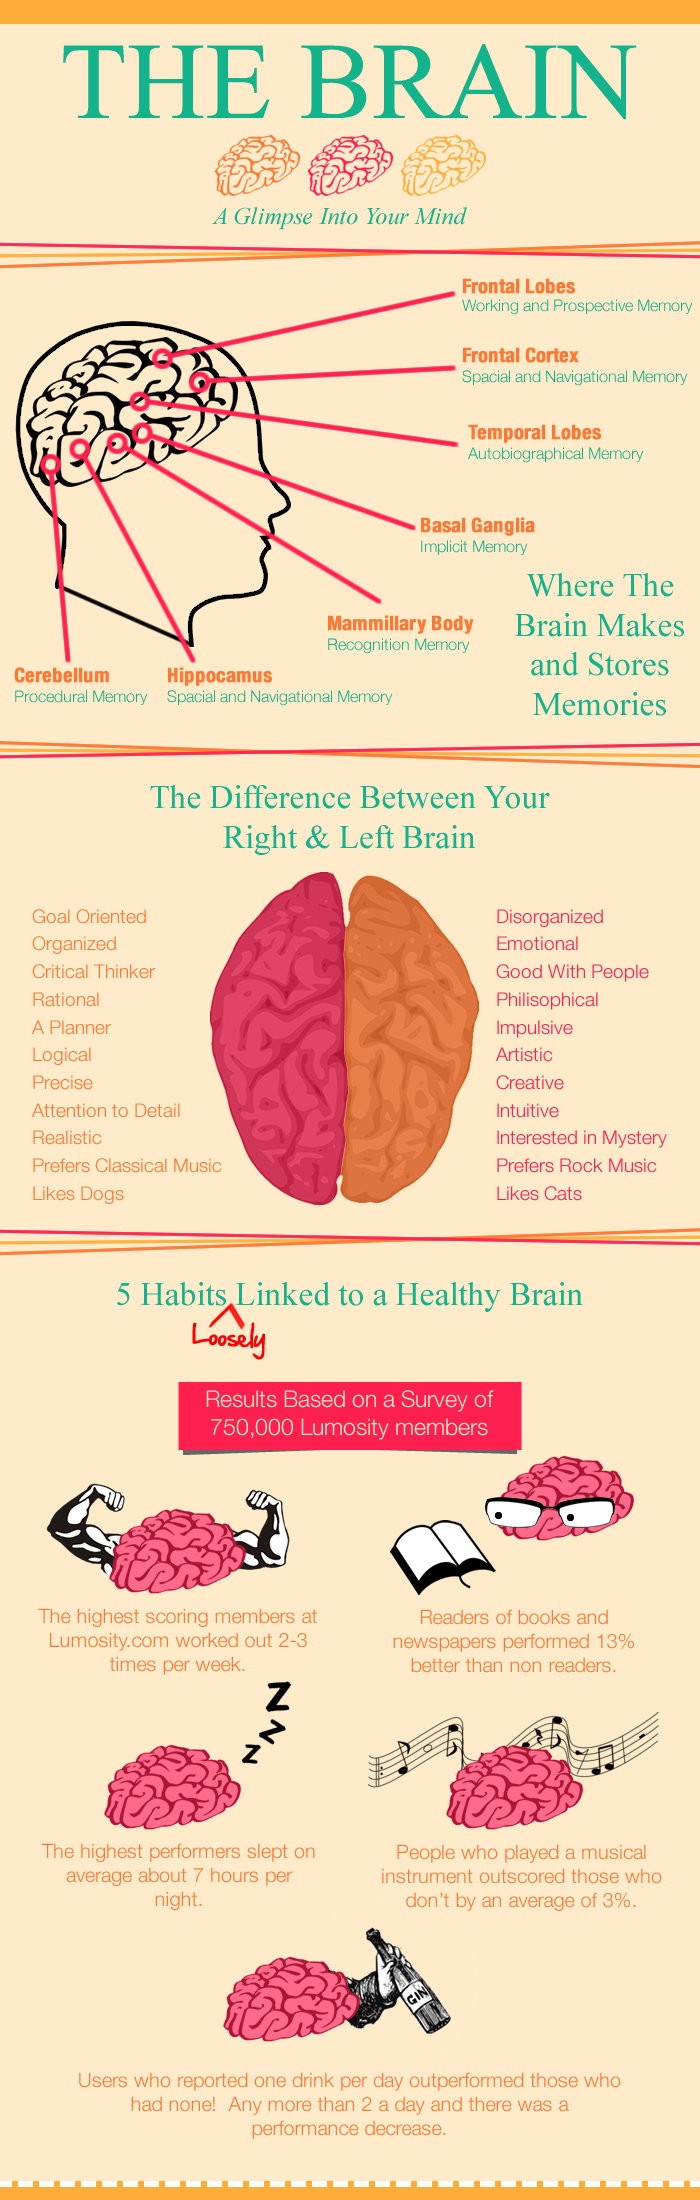 The Healthy Brain